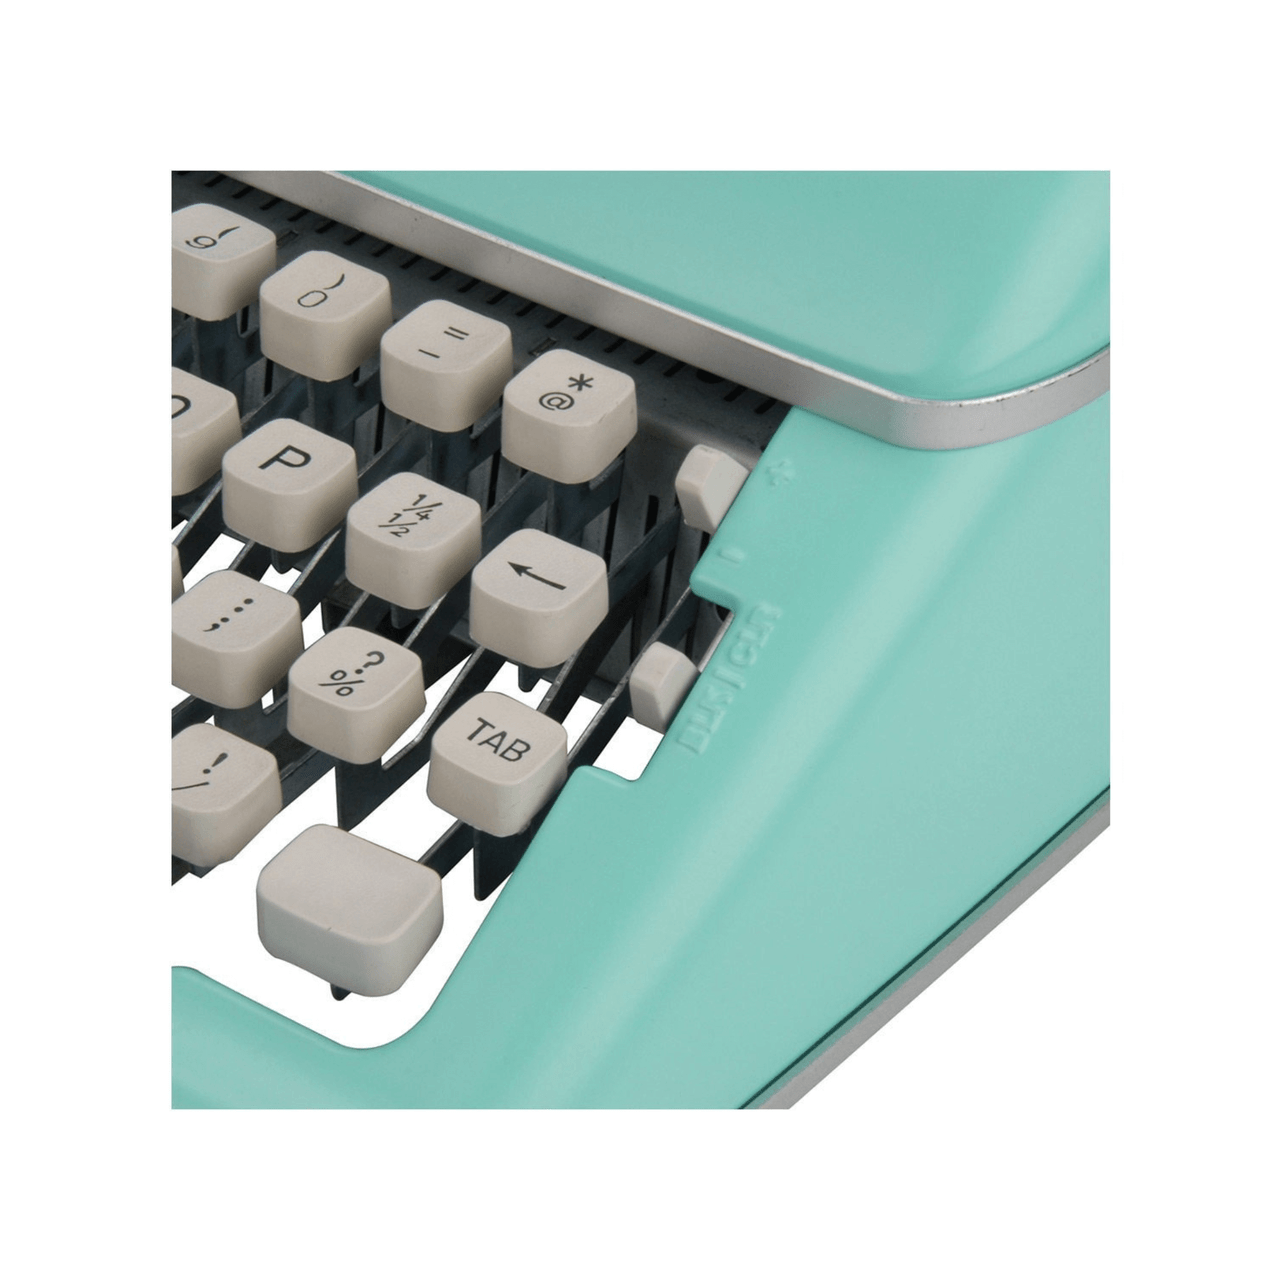 Royal Classic Manual Typewriter Mint 79101T - Best Buy